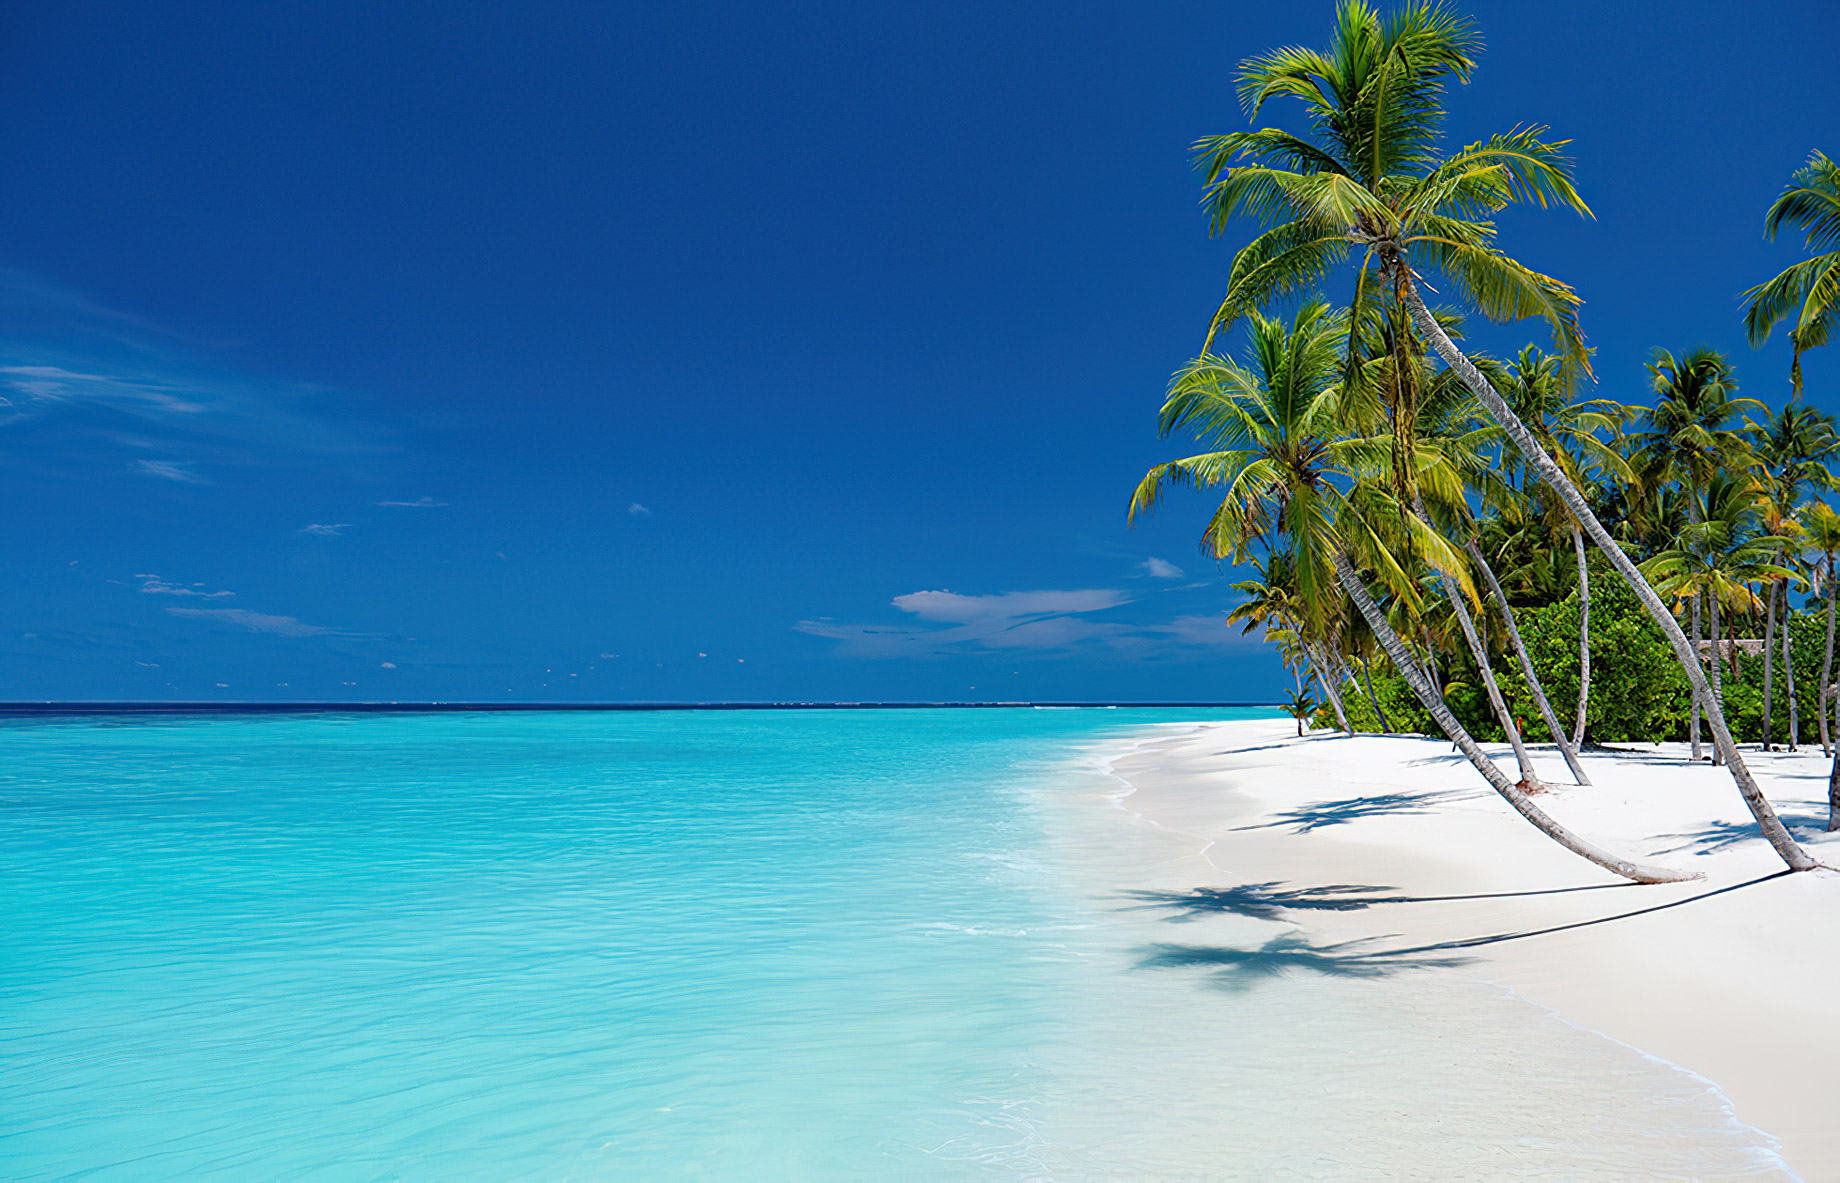 Baglioni Resort Maldives - Maagau Island, Rinbudhoo, Maldives - Beach Palm Trees